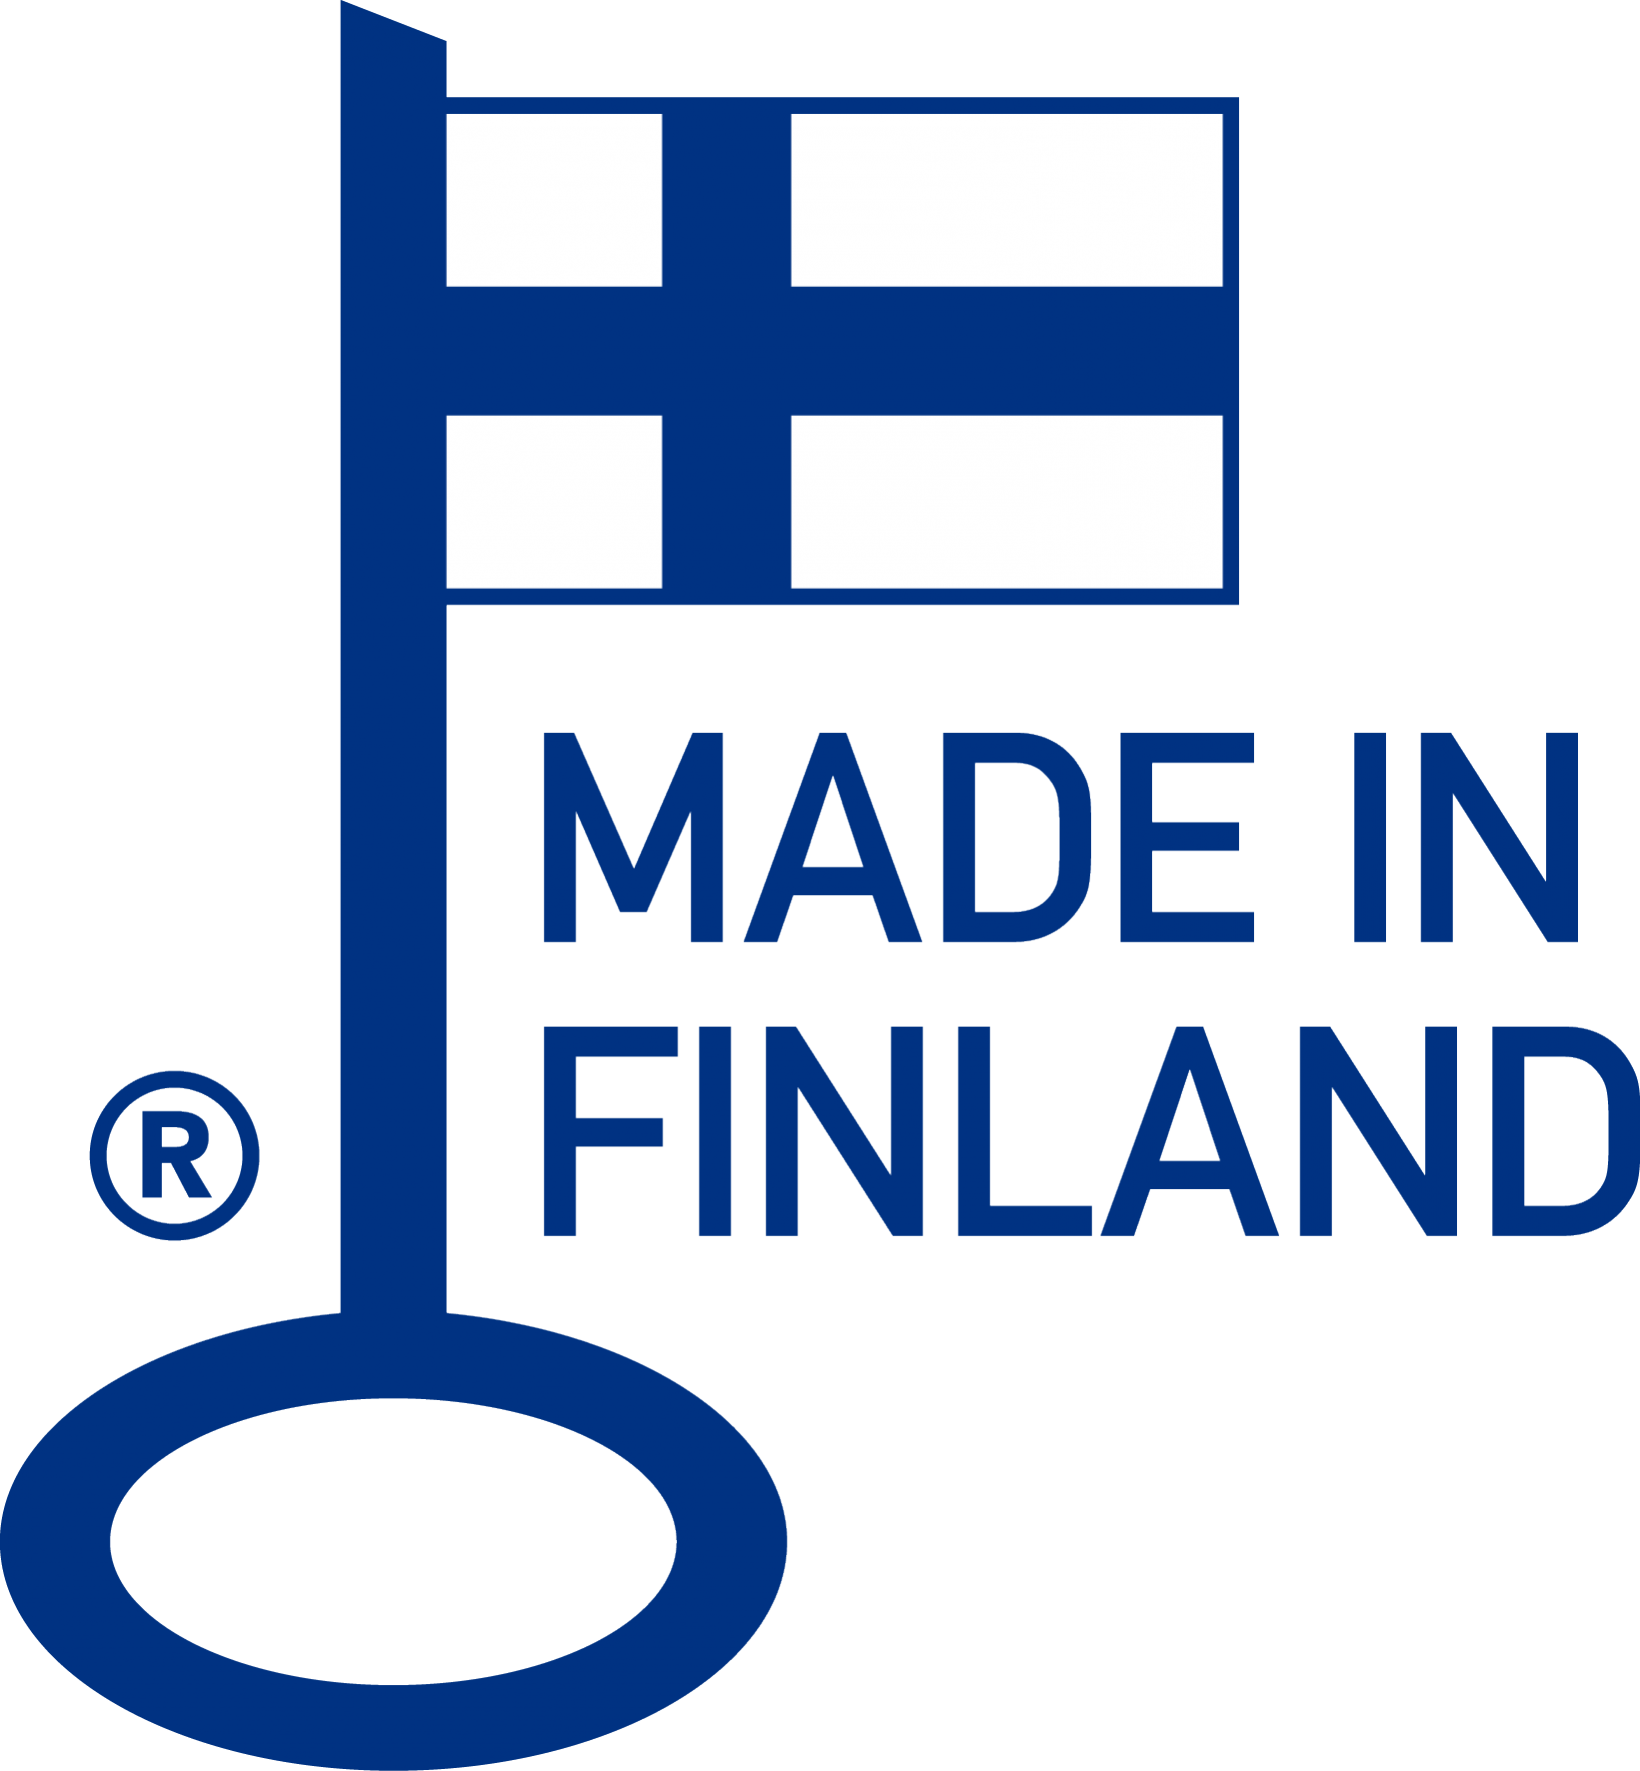 Madein Finland Logo PNG image